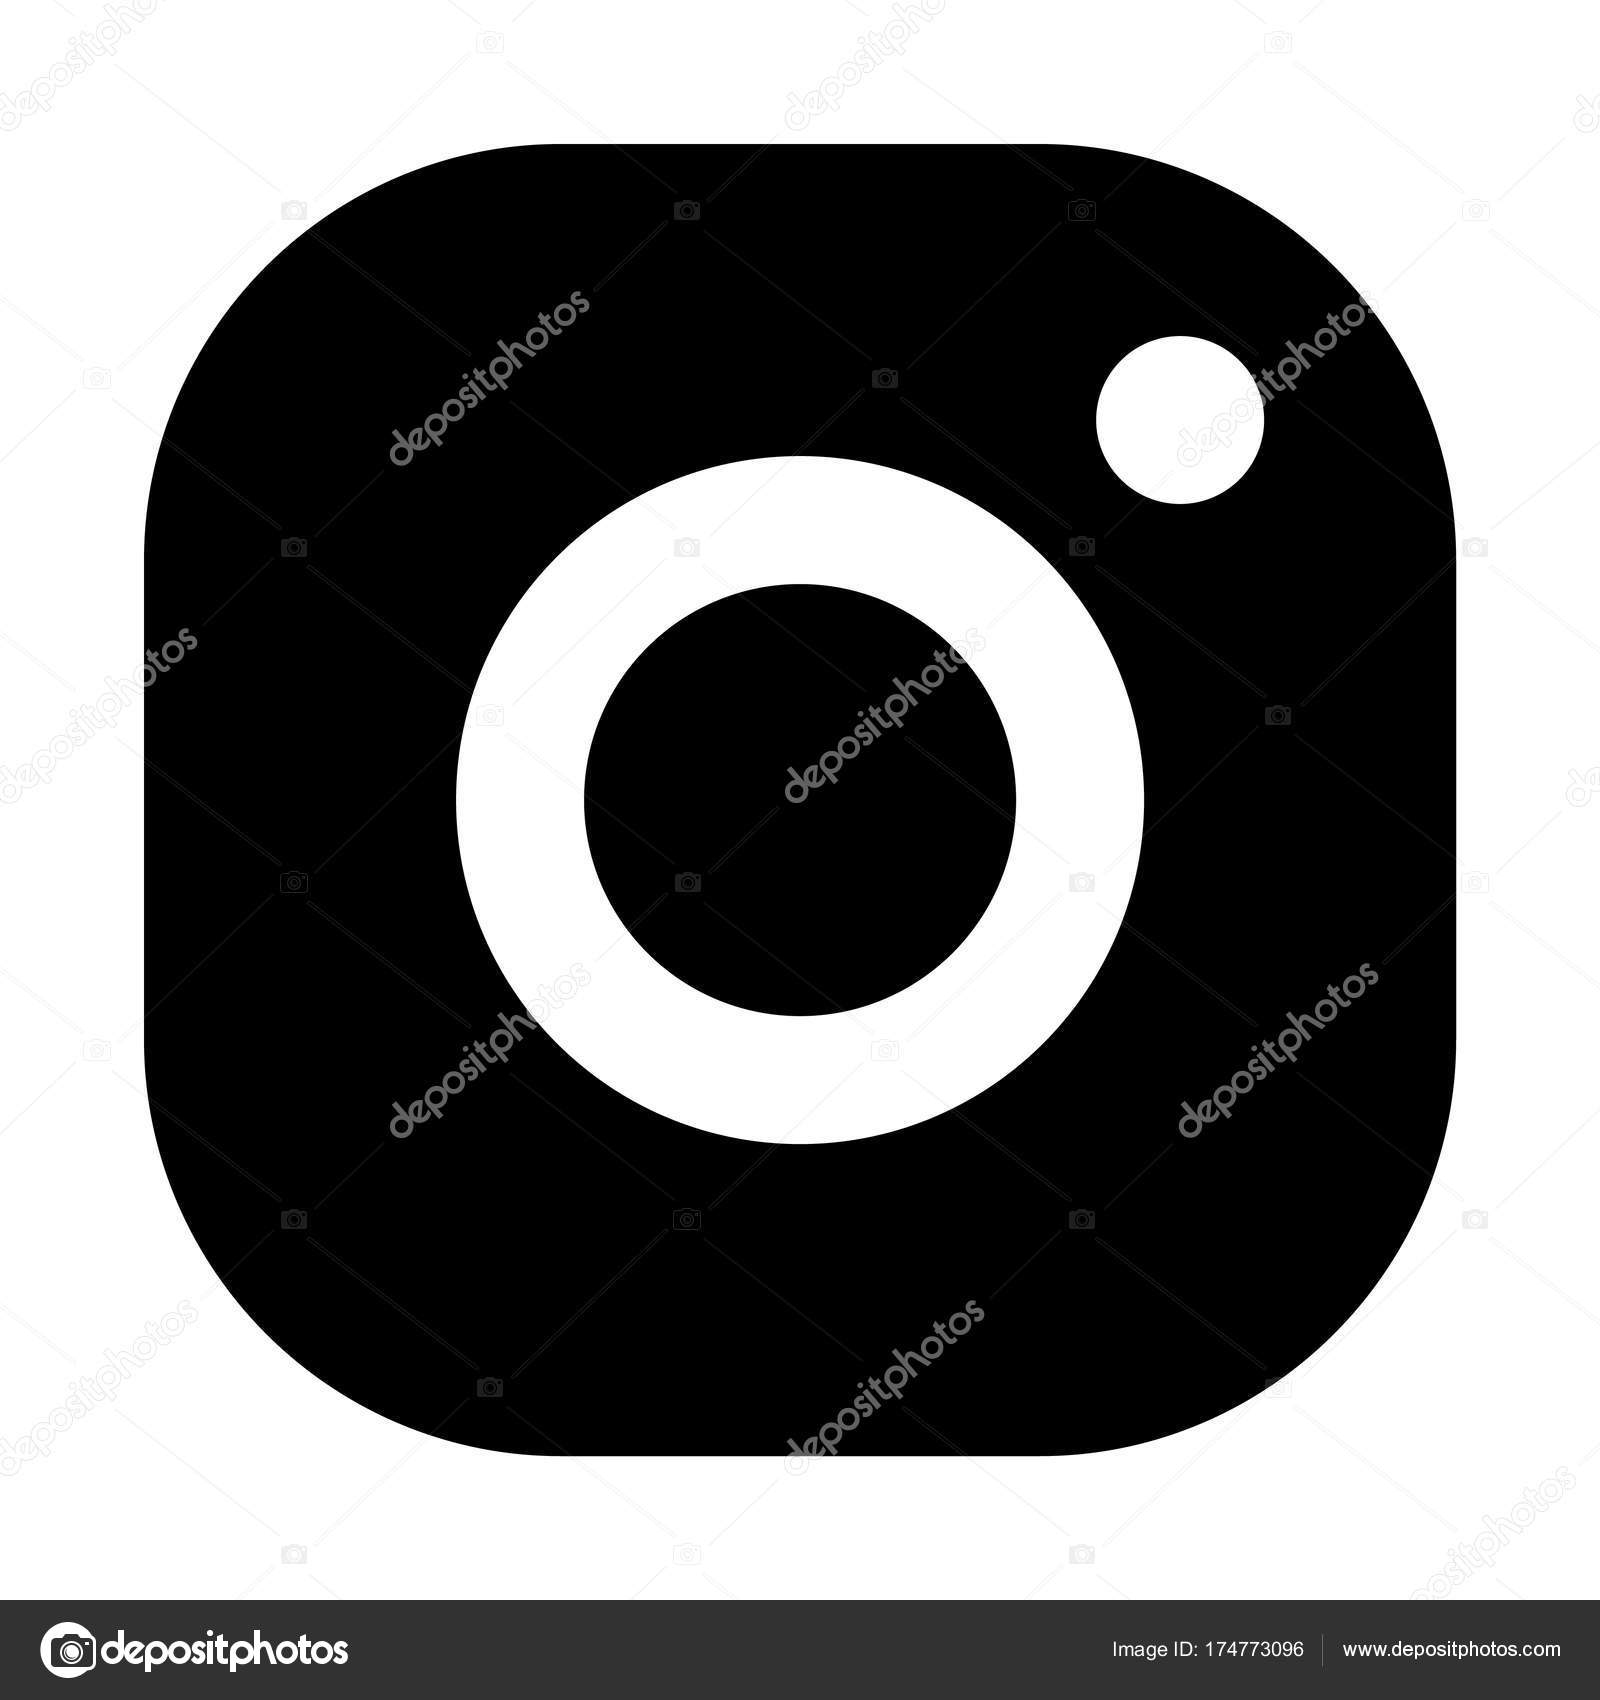 Instagram Icon | Basic Round Social Iconset | S-Icons